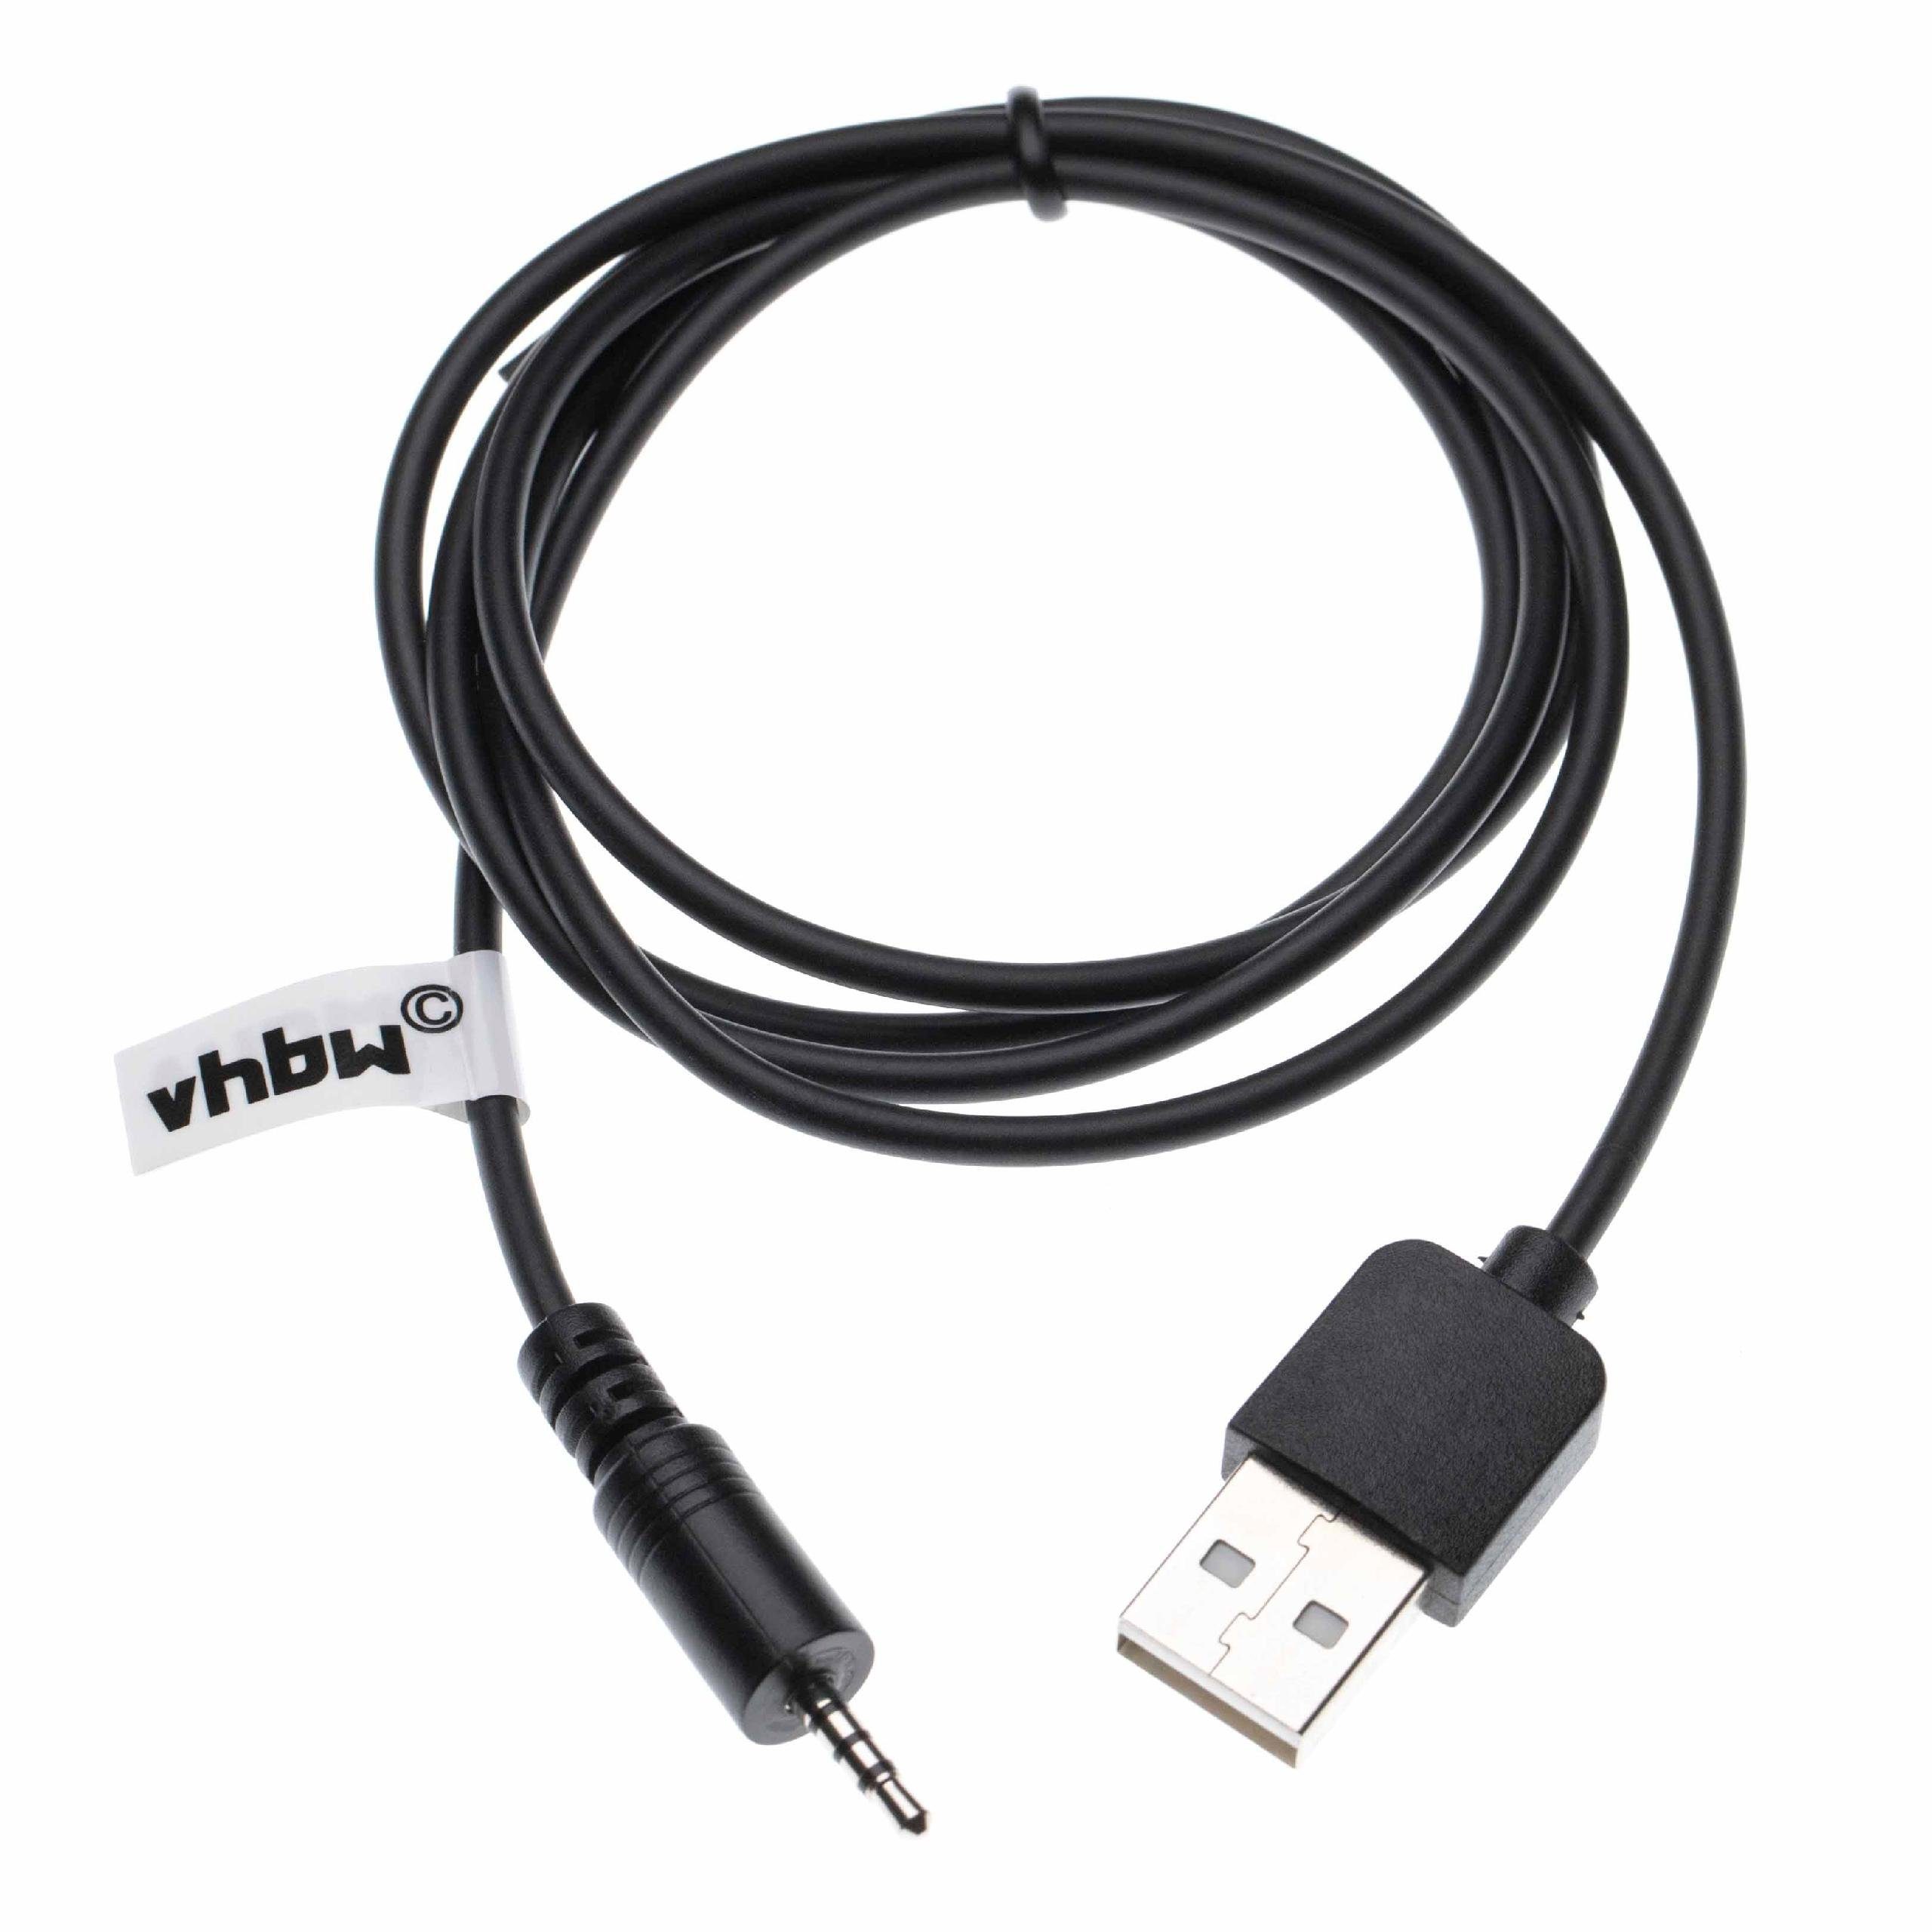 Elektro-Kabel passend Premium BT Harman Kardon Kopfhörer für vhbw